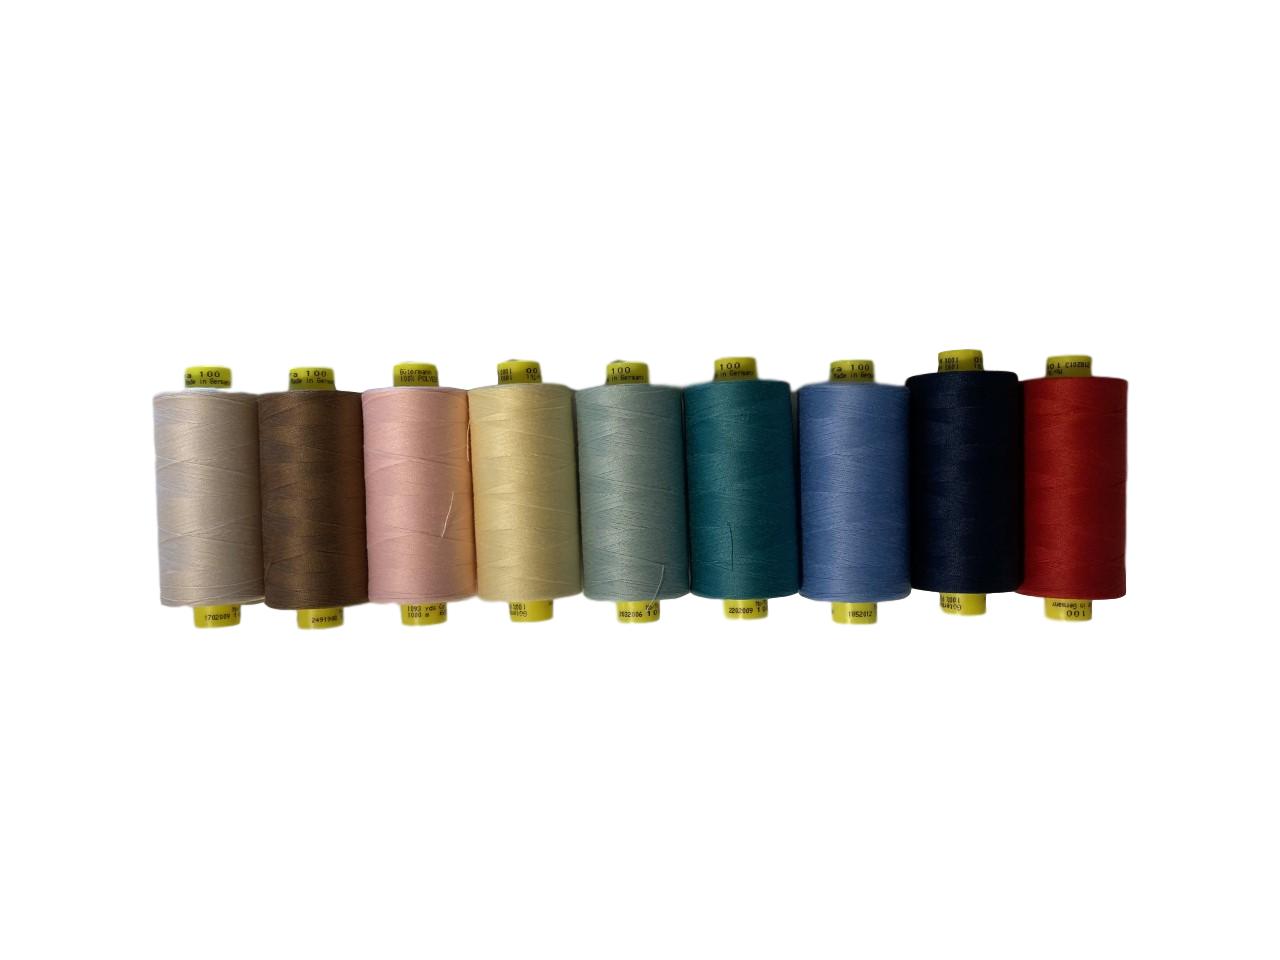 Gütermann Mara 100 All Purpose Thread Variety Pack 9 Spools - Tex 30 - 1,093 yds. each spool - 1 each of tan, brown, pink, pale yellow, light blue, teal, royal blue, black and red